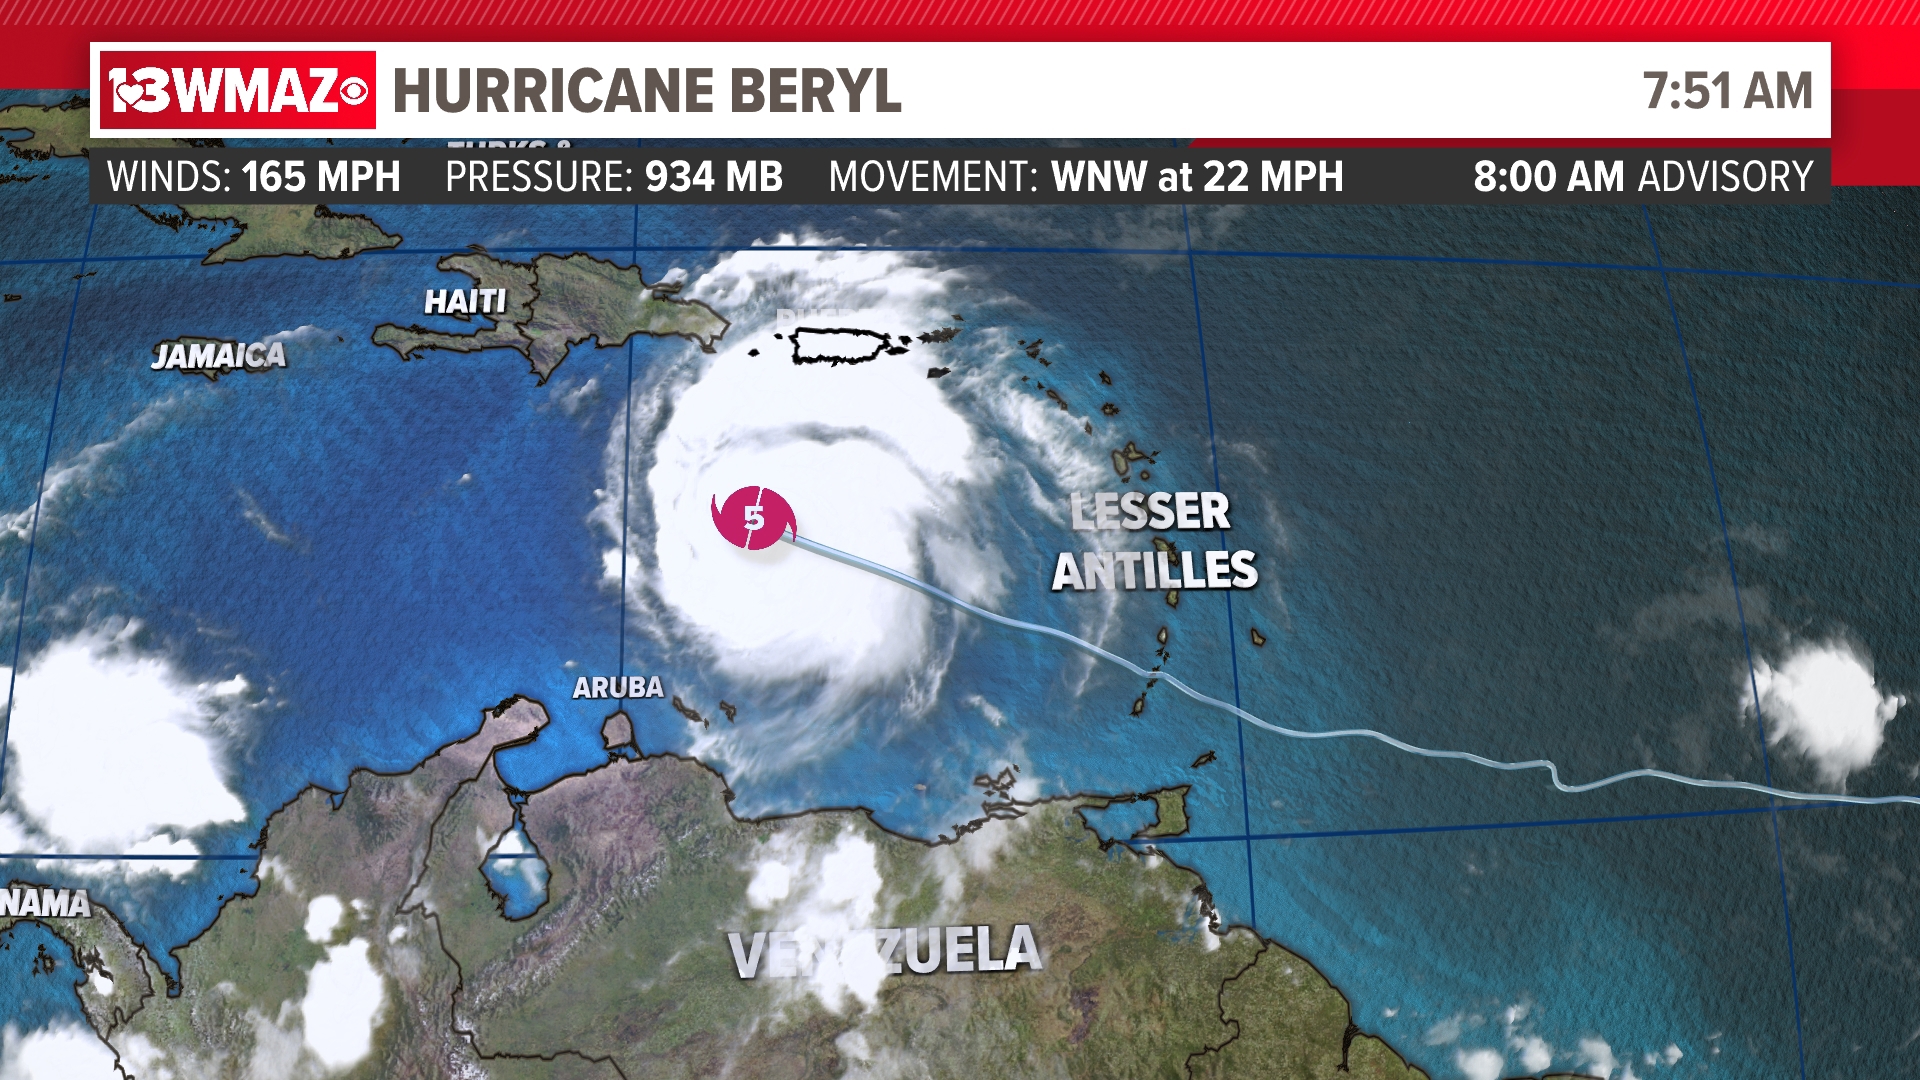 Hurricane Beryl continues to maintain Category 5 status as it treks through the Caribbean Sea.